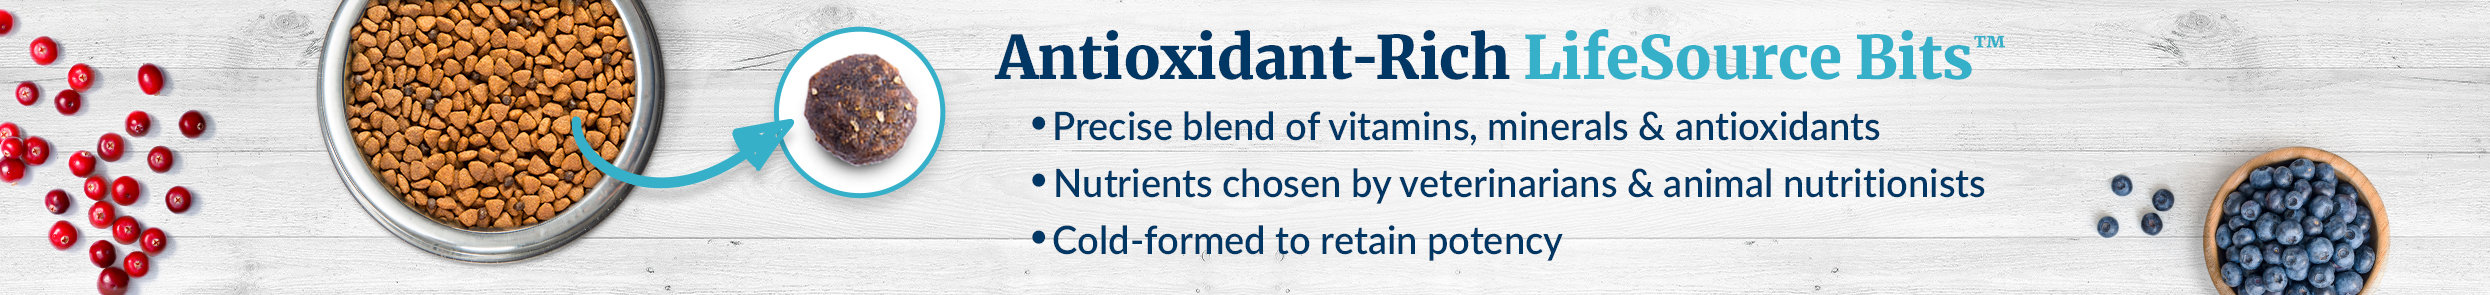 Antioxidant-Rich LifeSource Bits